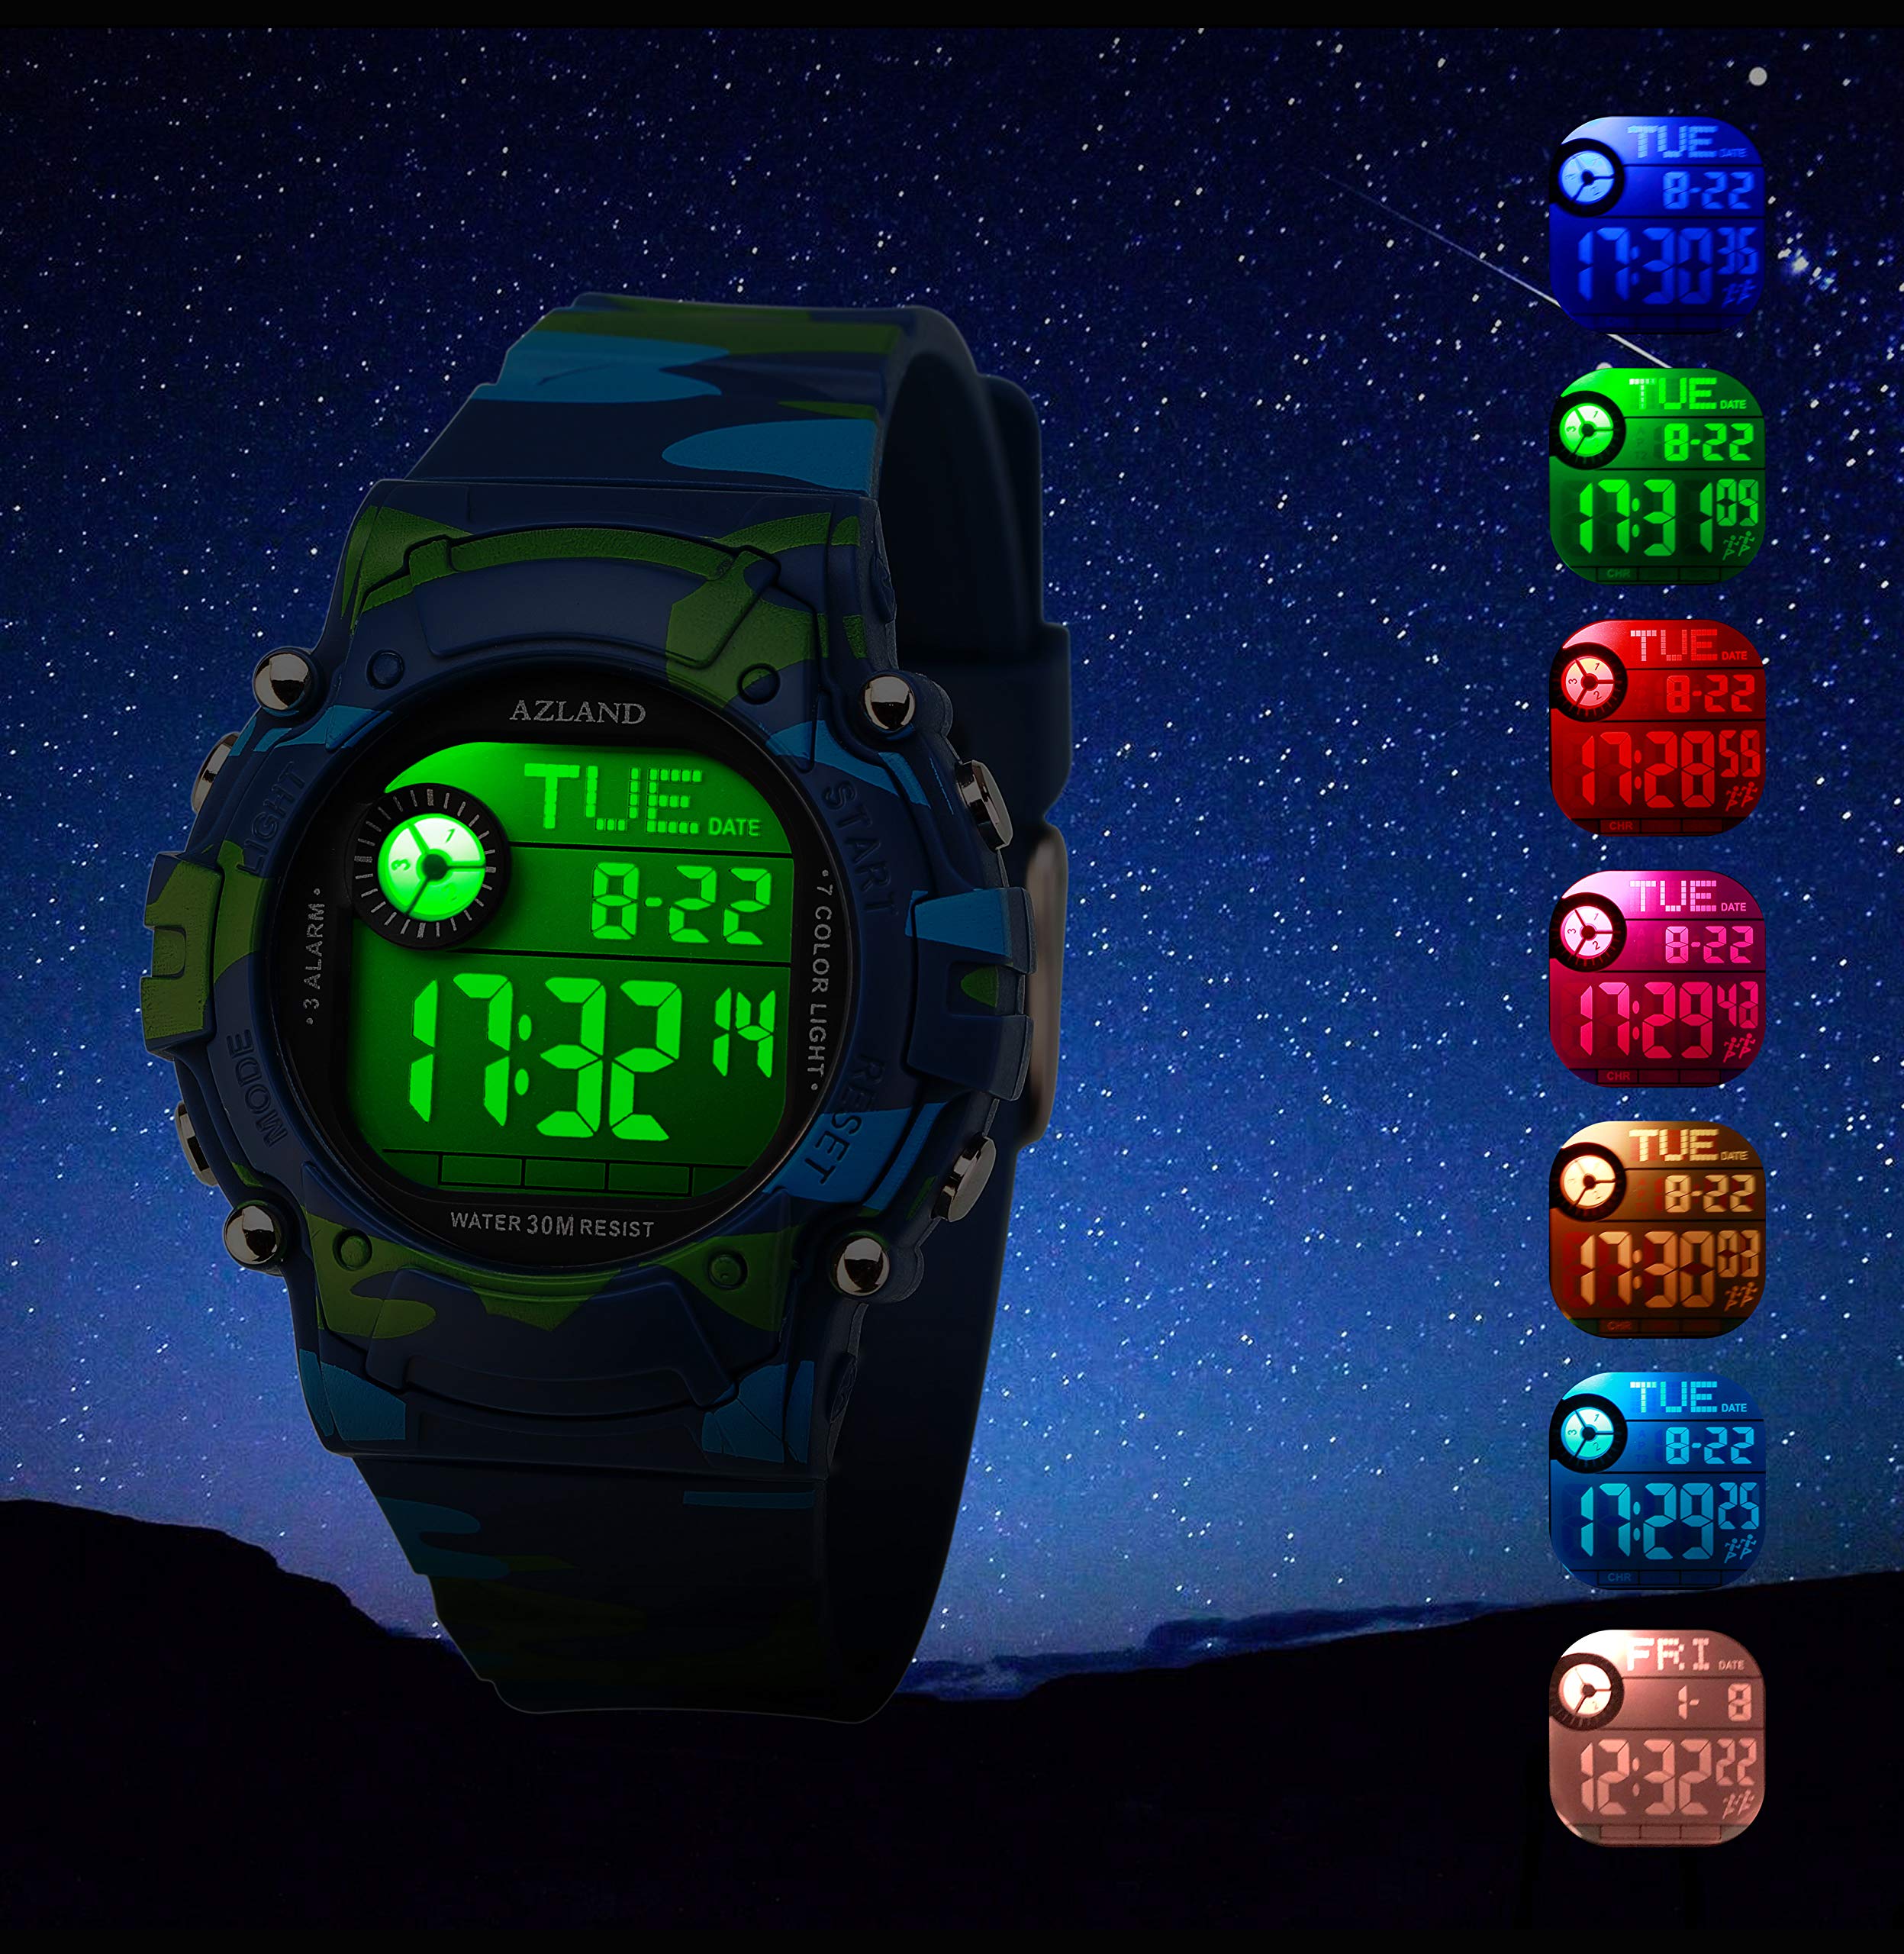 AZLAND 3 Multiple Alarms Reminder Sports Kids Wristwatch Waterproof Boys Girls Digital Watches